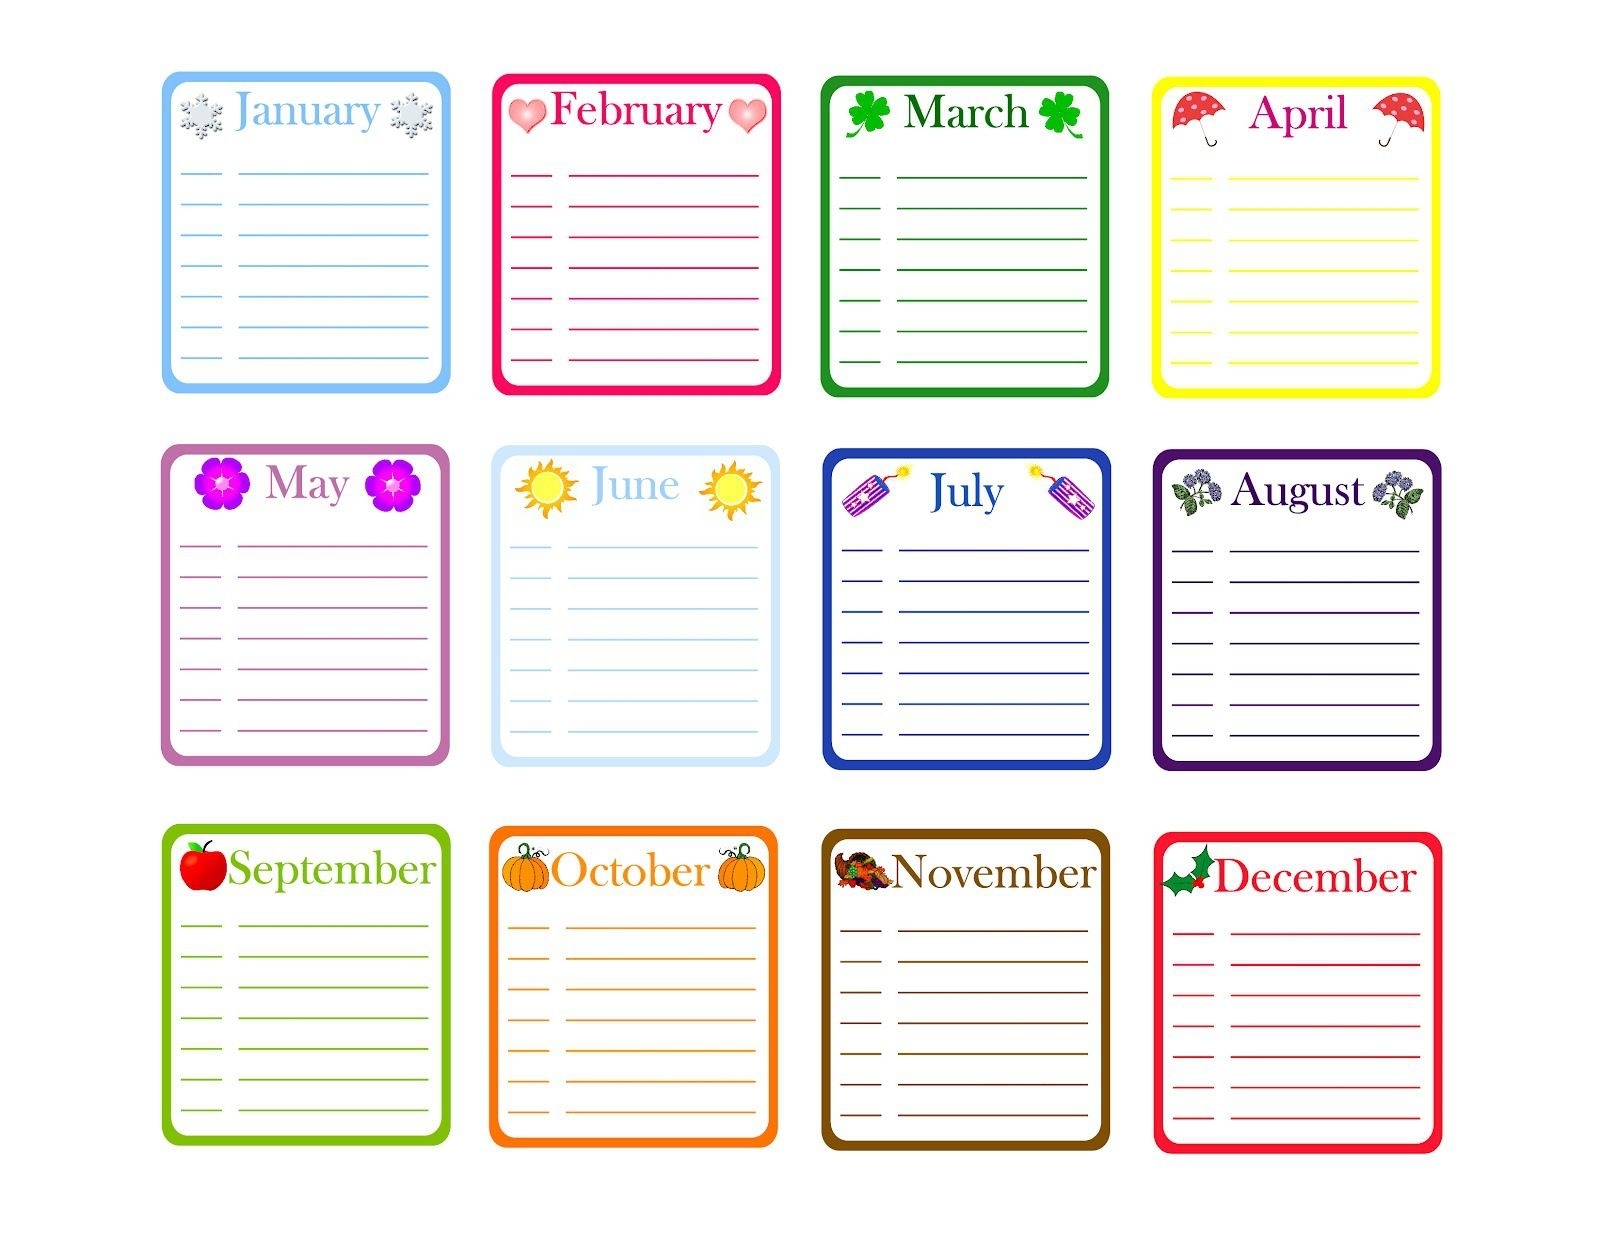 Yearly Birthday Calendar Template. Free Classroom Printables for Free Printable Birthday Calendar Yearly